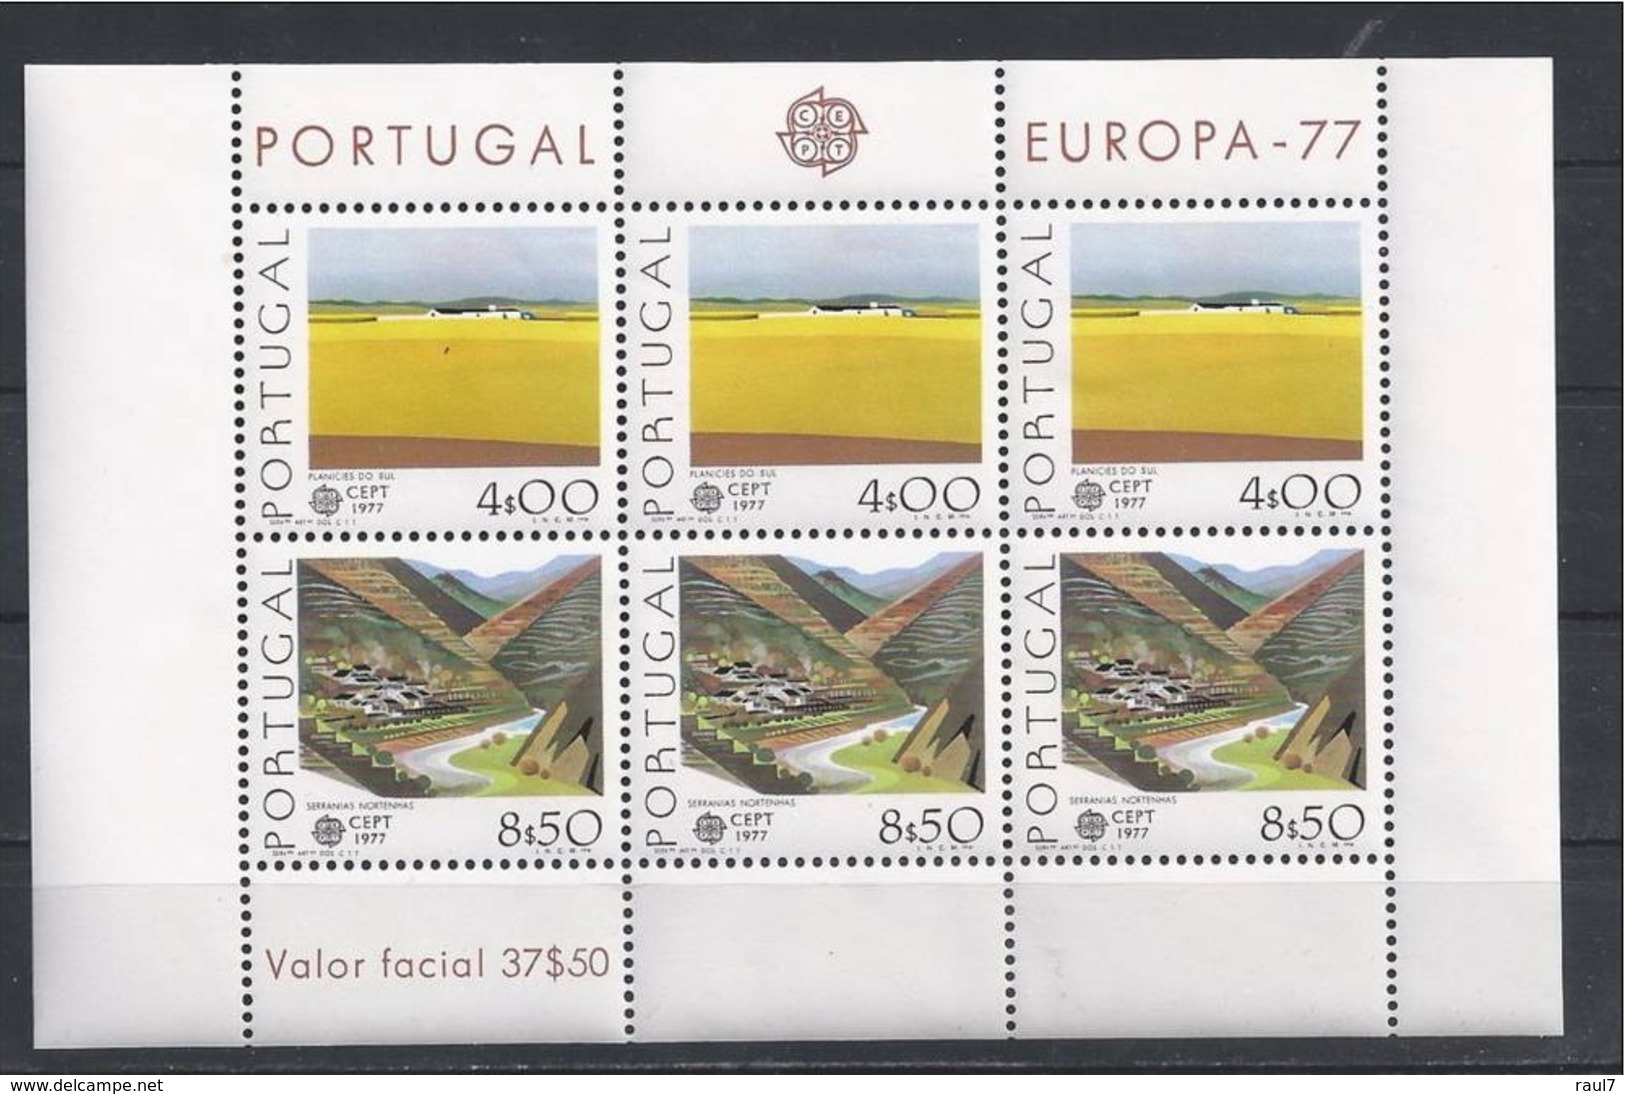 EUROPA - CEPT 1977 - Portugal - BF Neufs // Mnh // Cv €50.00 - 1977